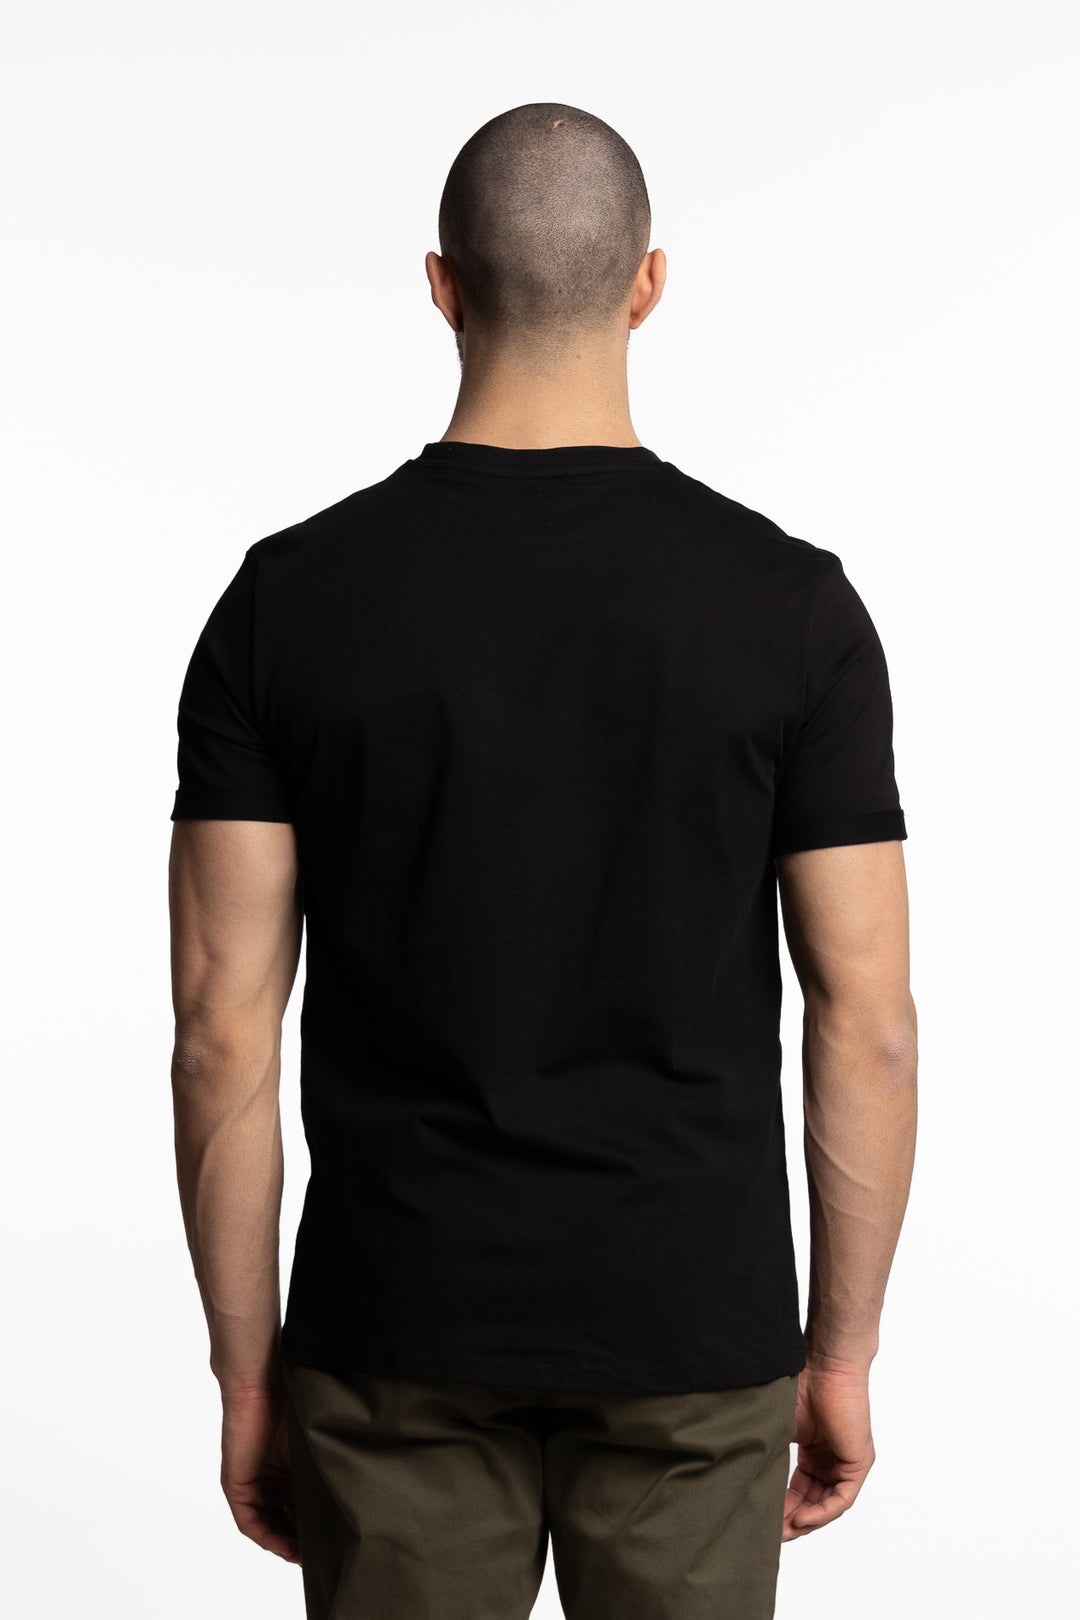 Copenhagen 2011 T-Shirt Black